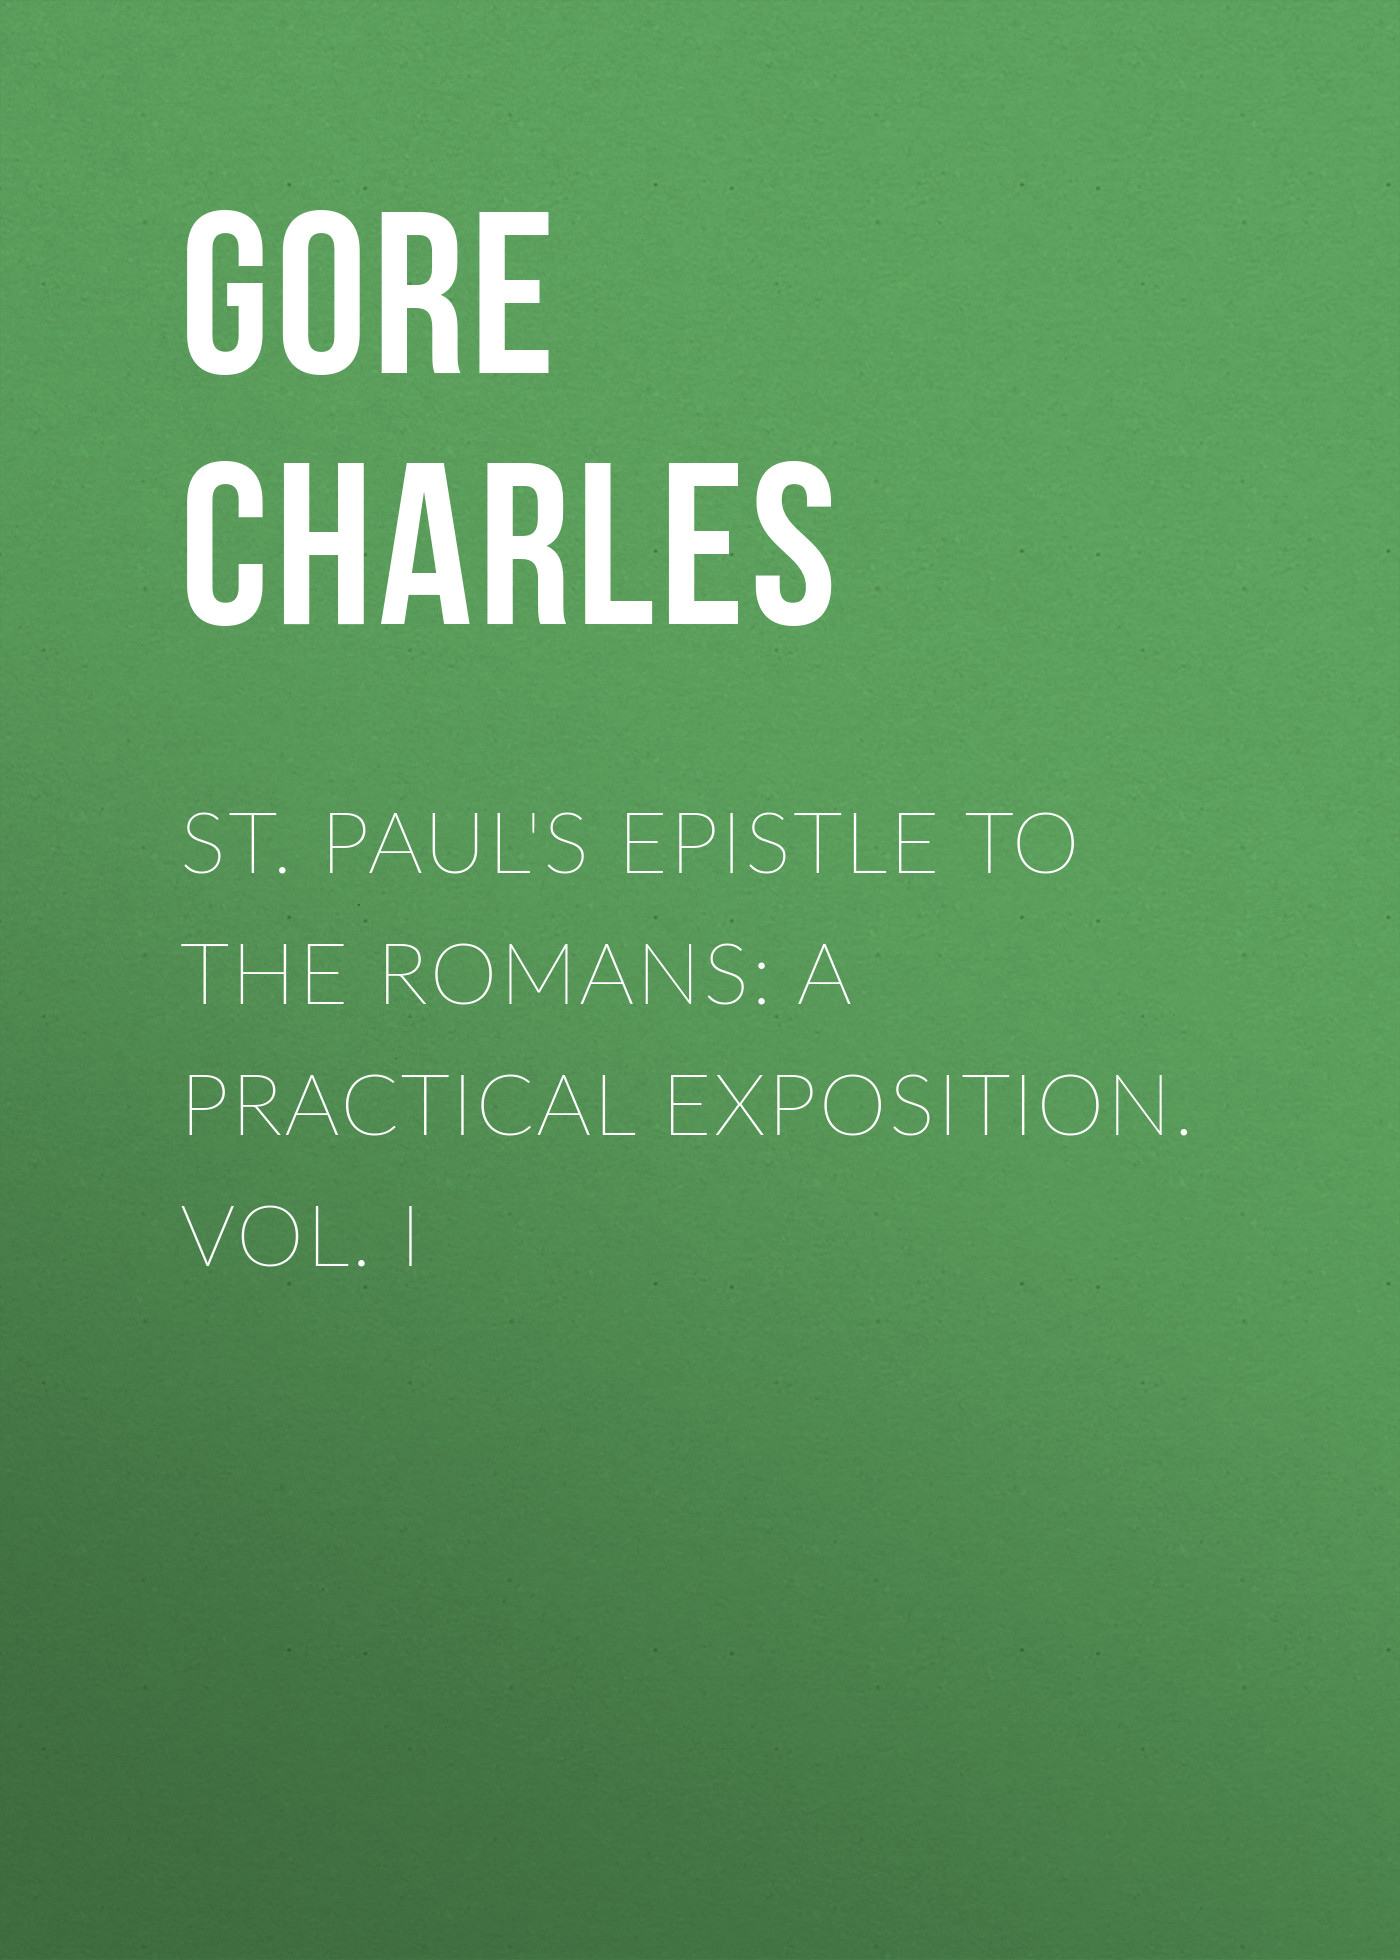 St. Paul's Epistle to the Romans: A Practical Exposition. Vol. I